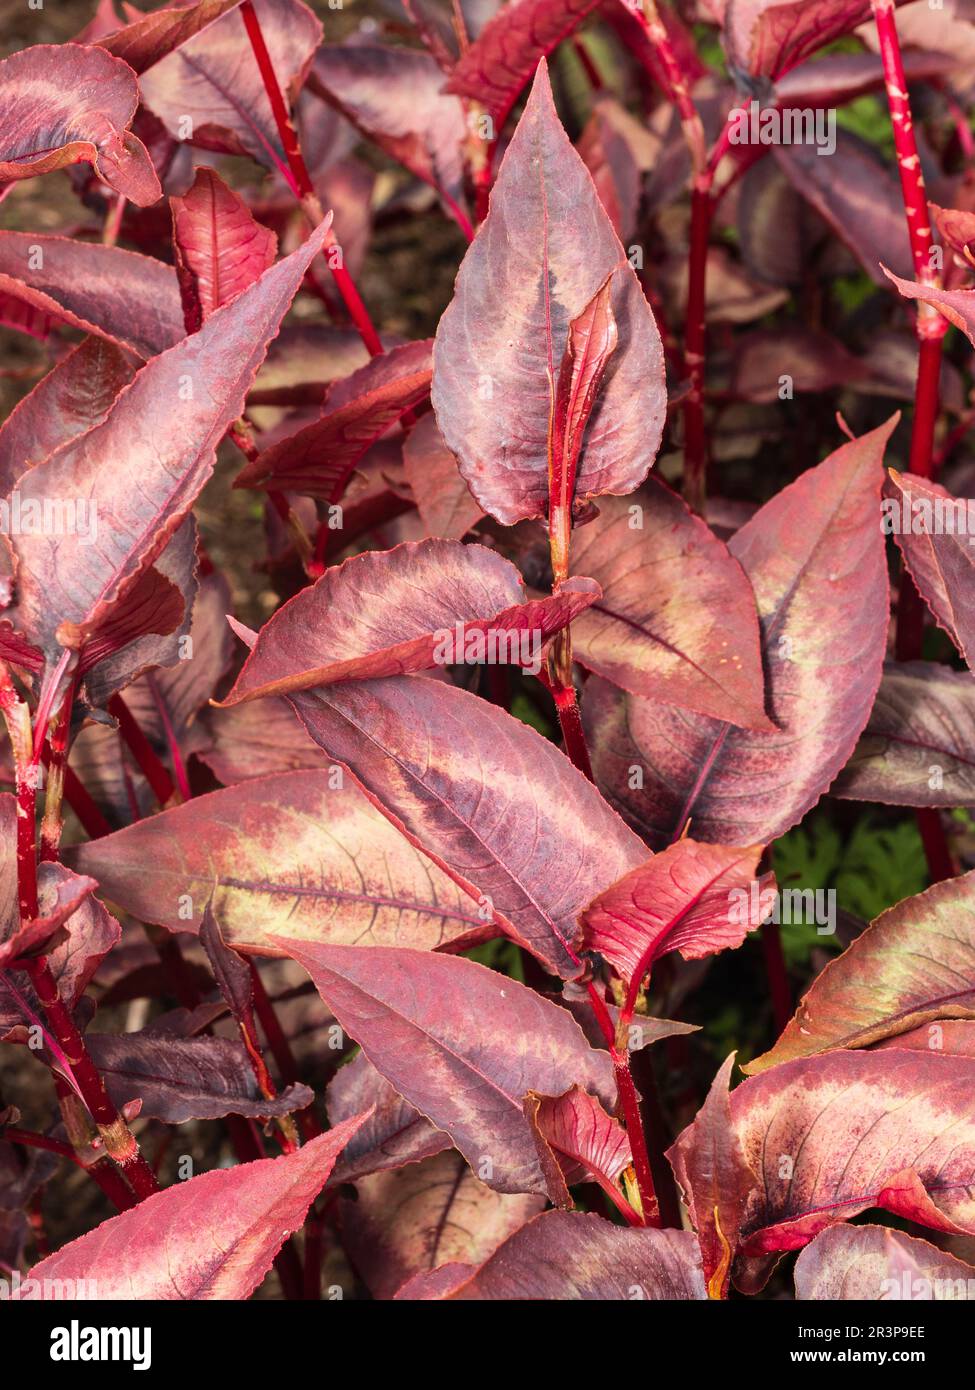 Hojas rojas plateadas centradas de la planta de follaje perenne ornamental resistente, Persicaria microcephala 'Silver Dragon' Foto de stock